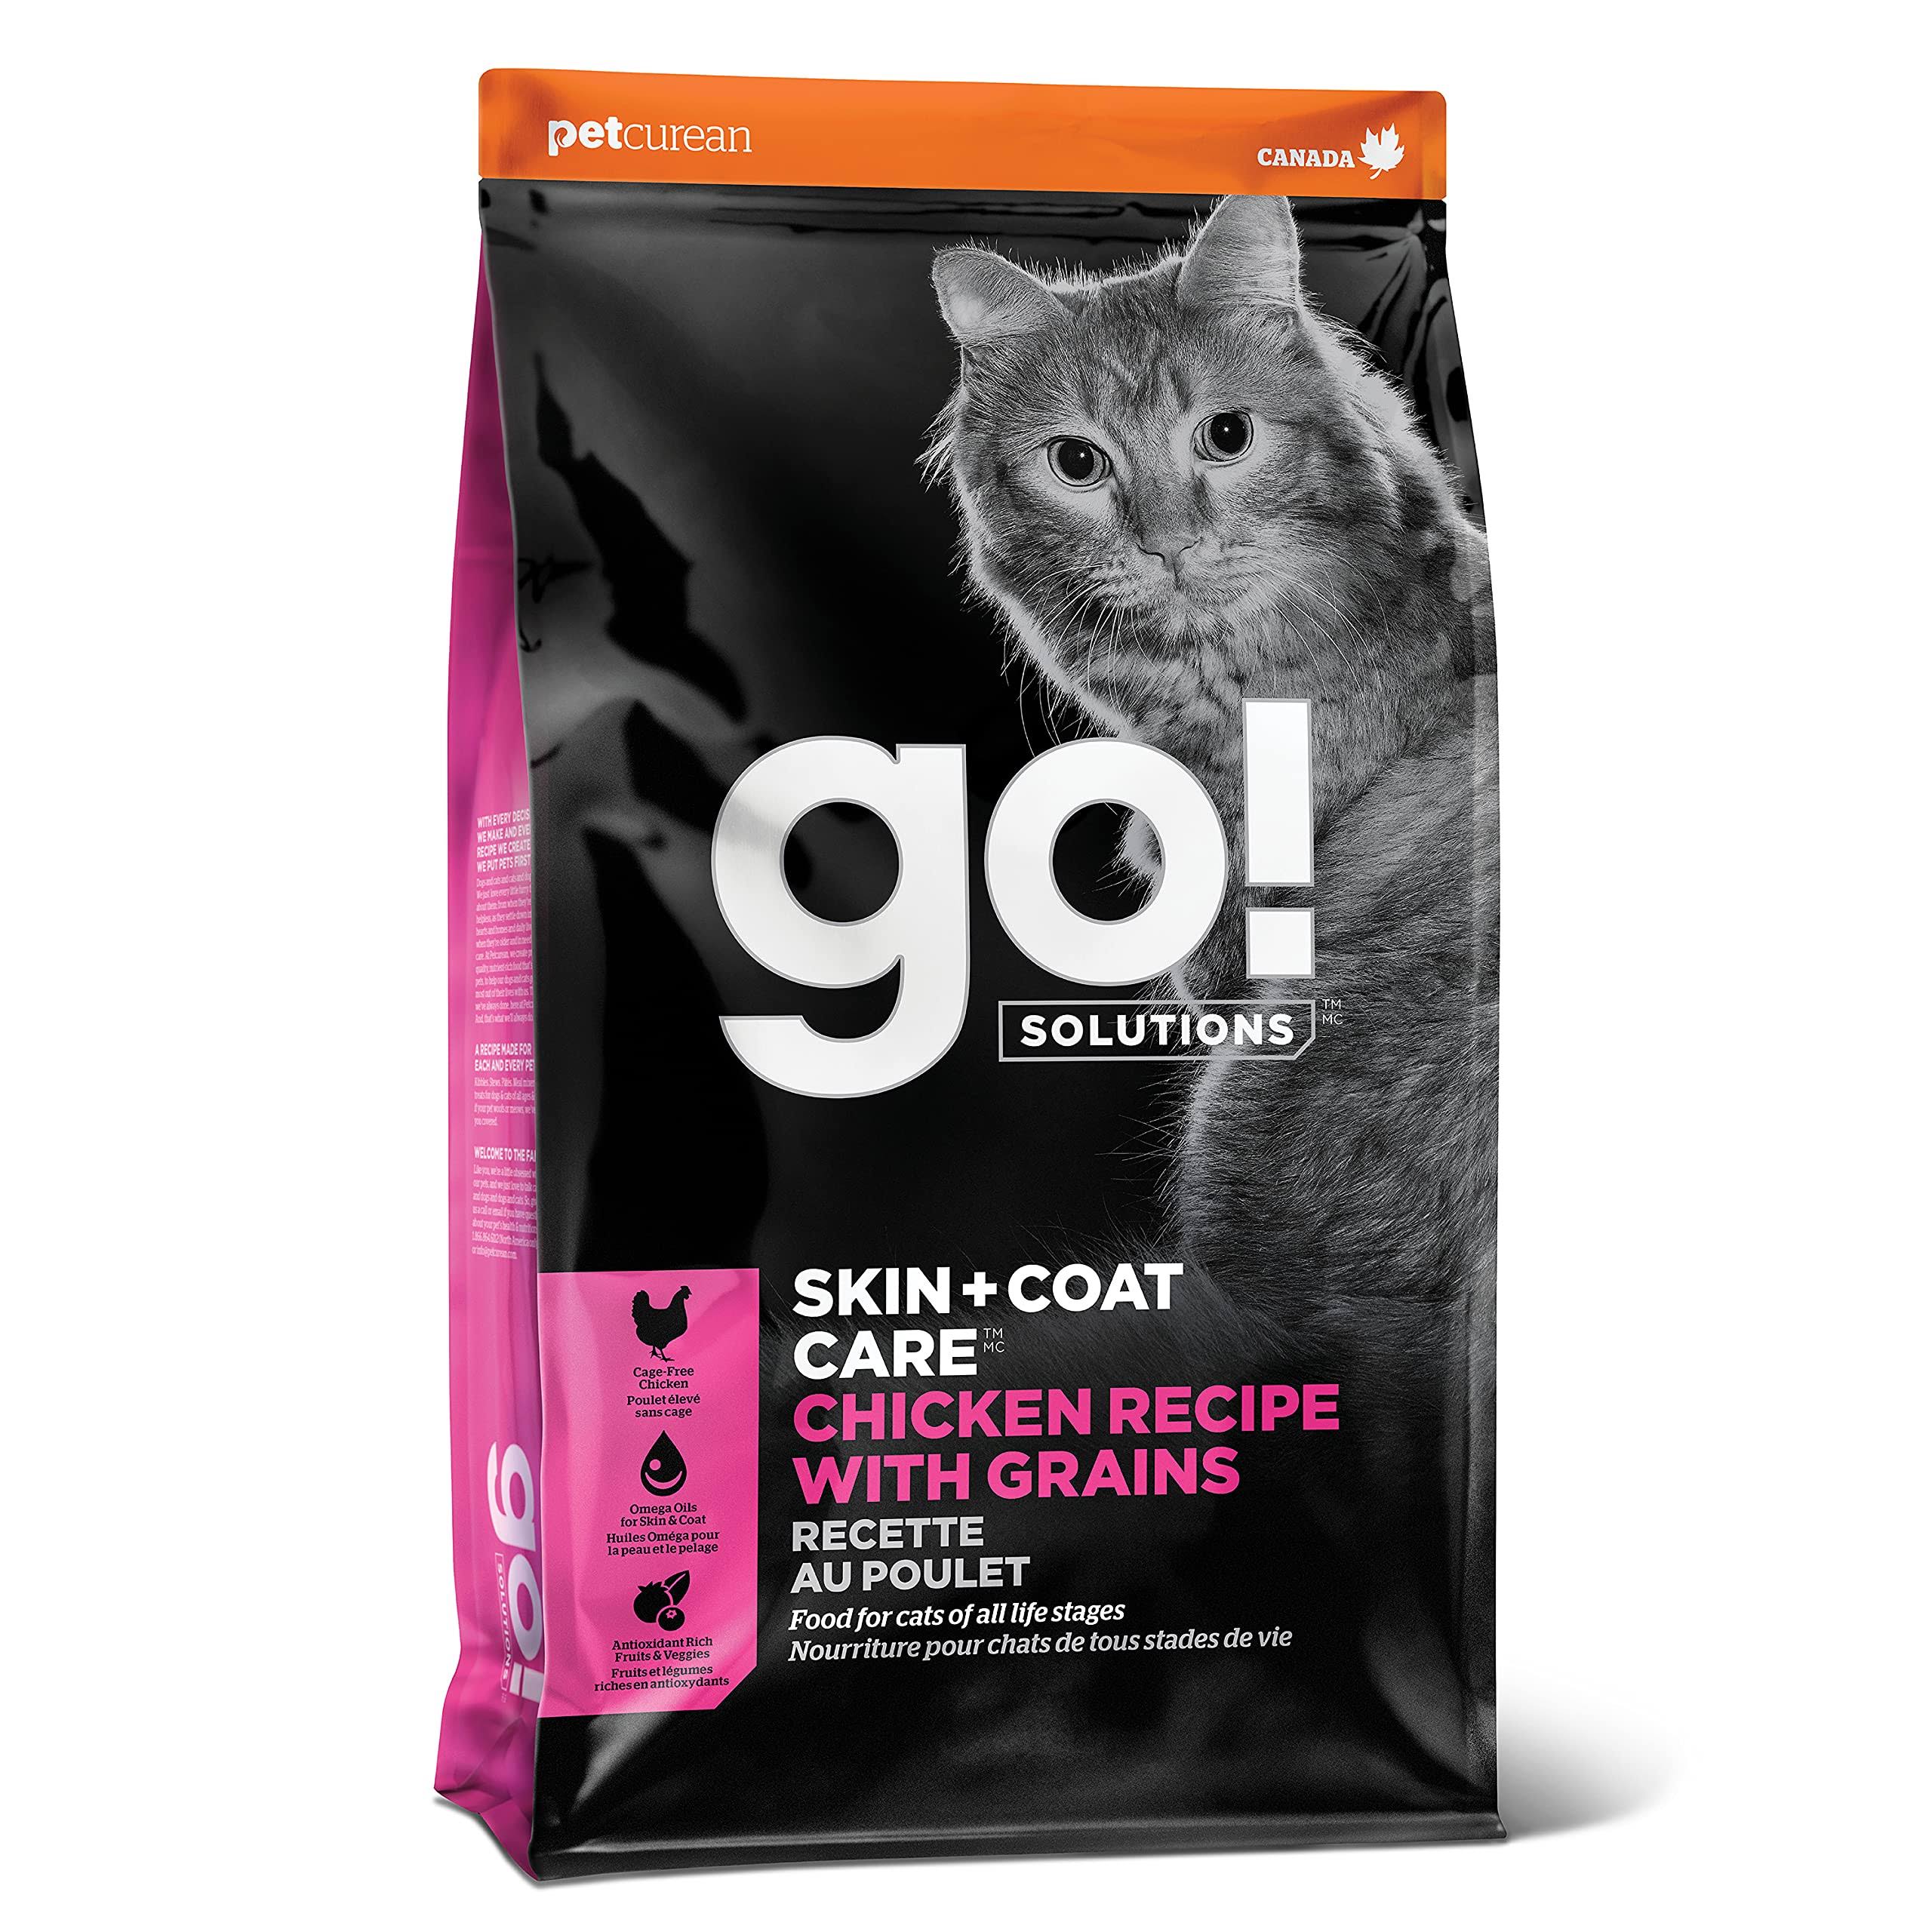 Go! Solutions Skin + Coat Care Chicken Cat Food [8lb]